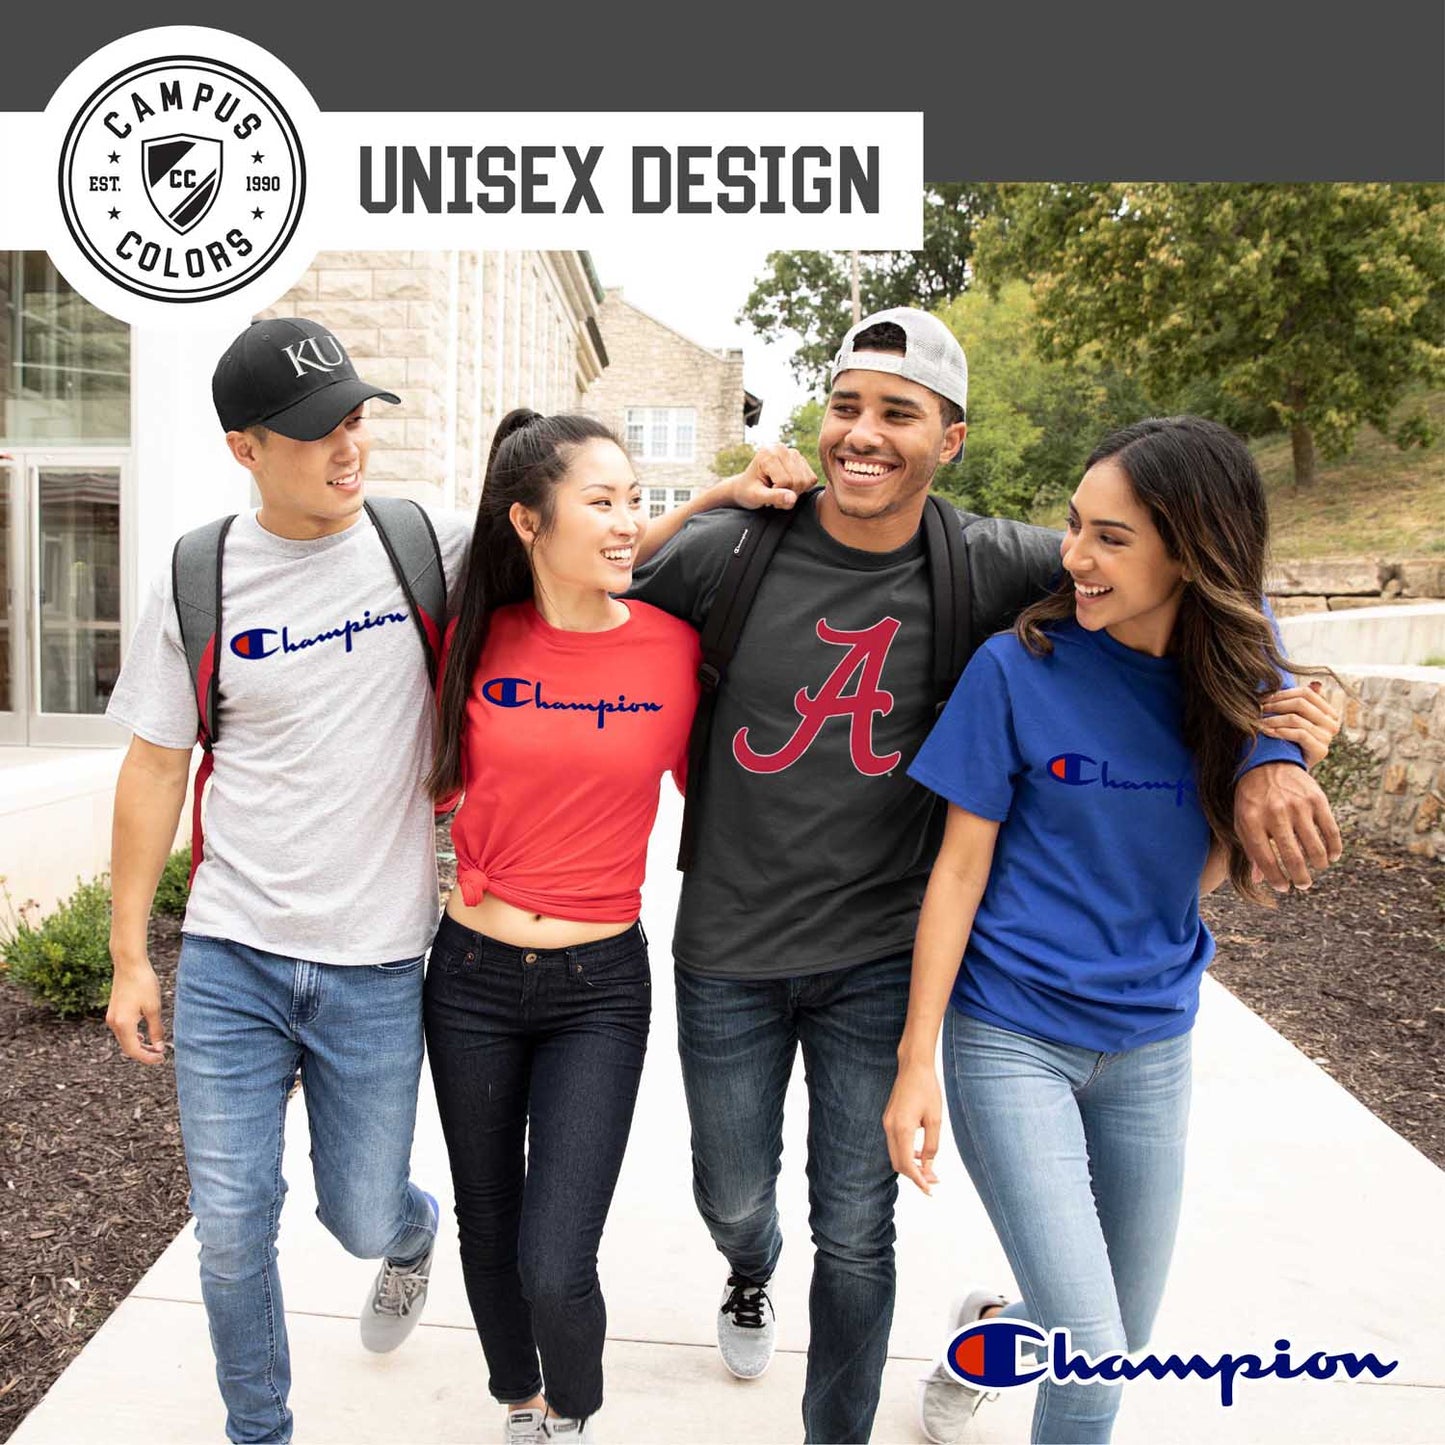 Alabama Crimson Tide Adult NCAA Soft Style Mascot Tagless T-Shirt  - Charcoal